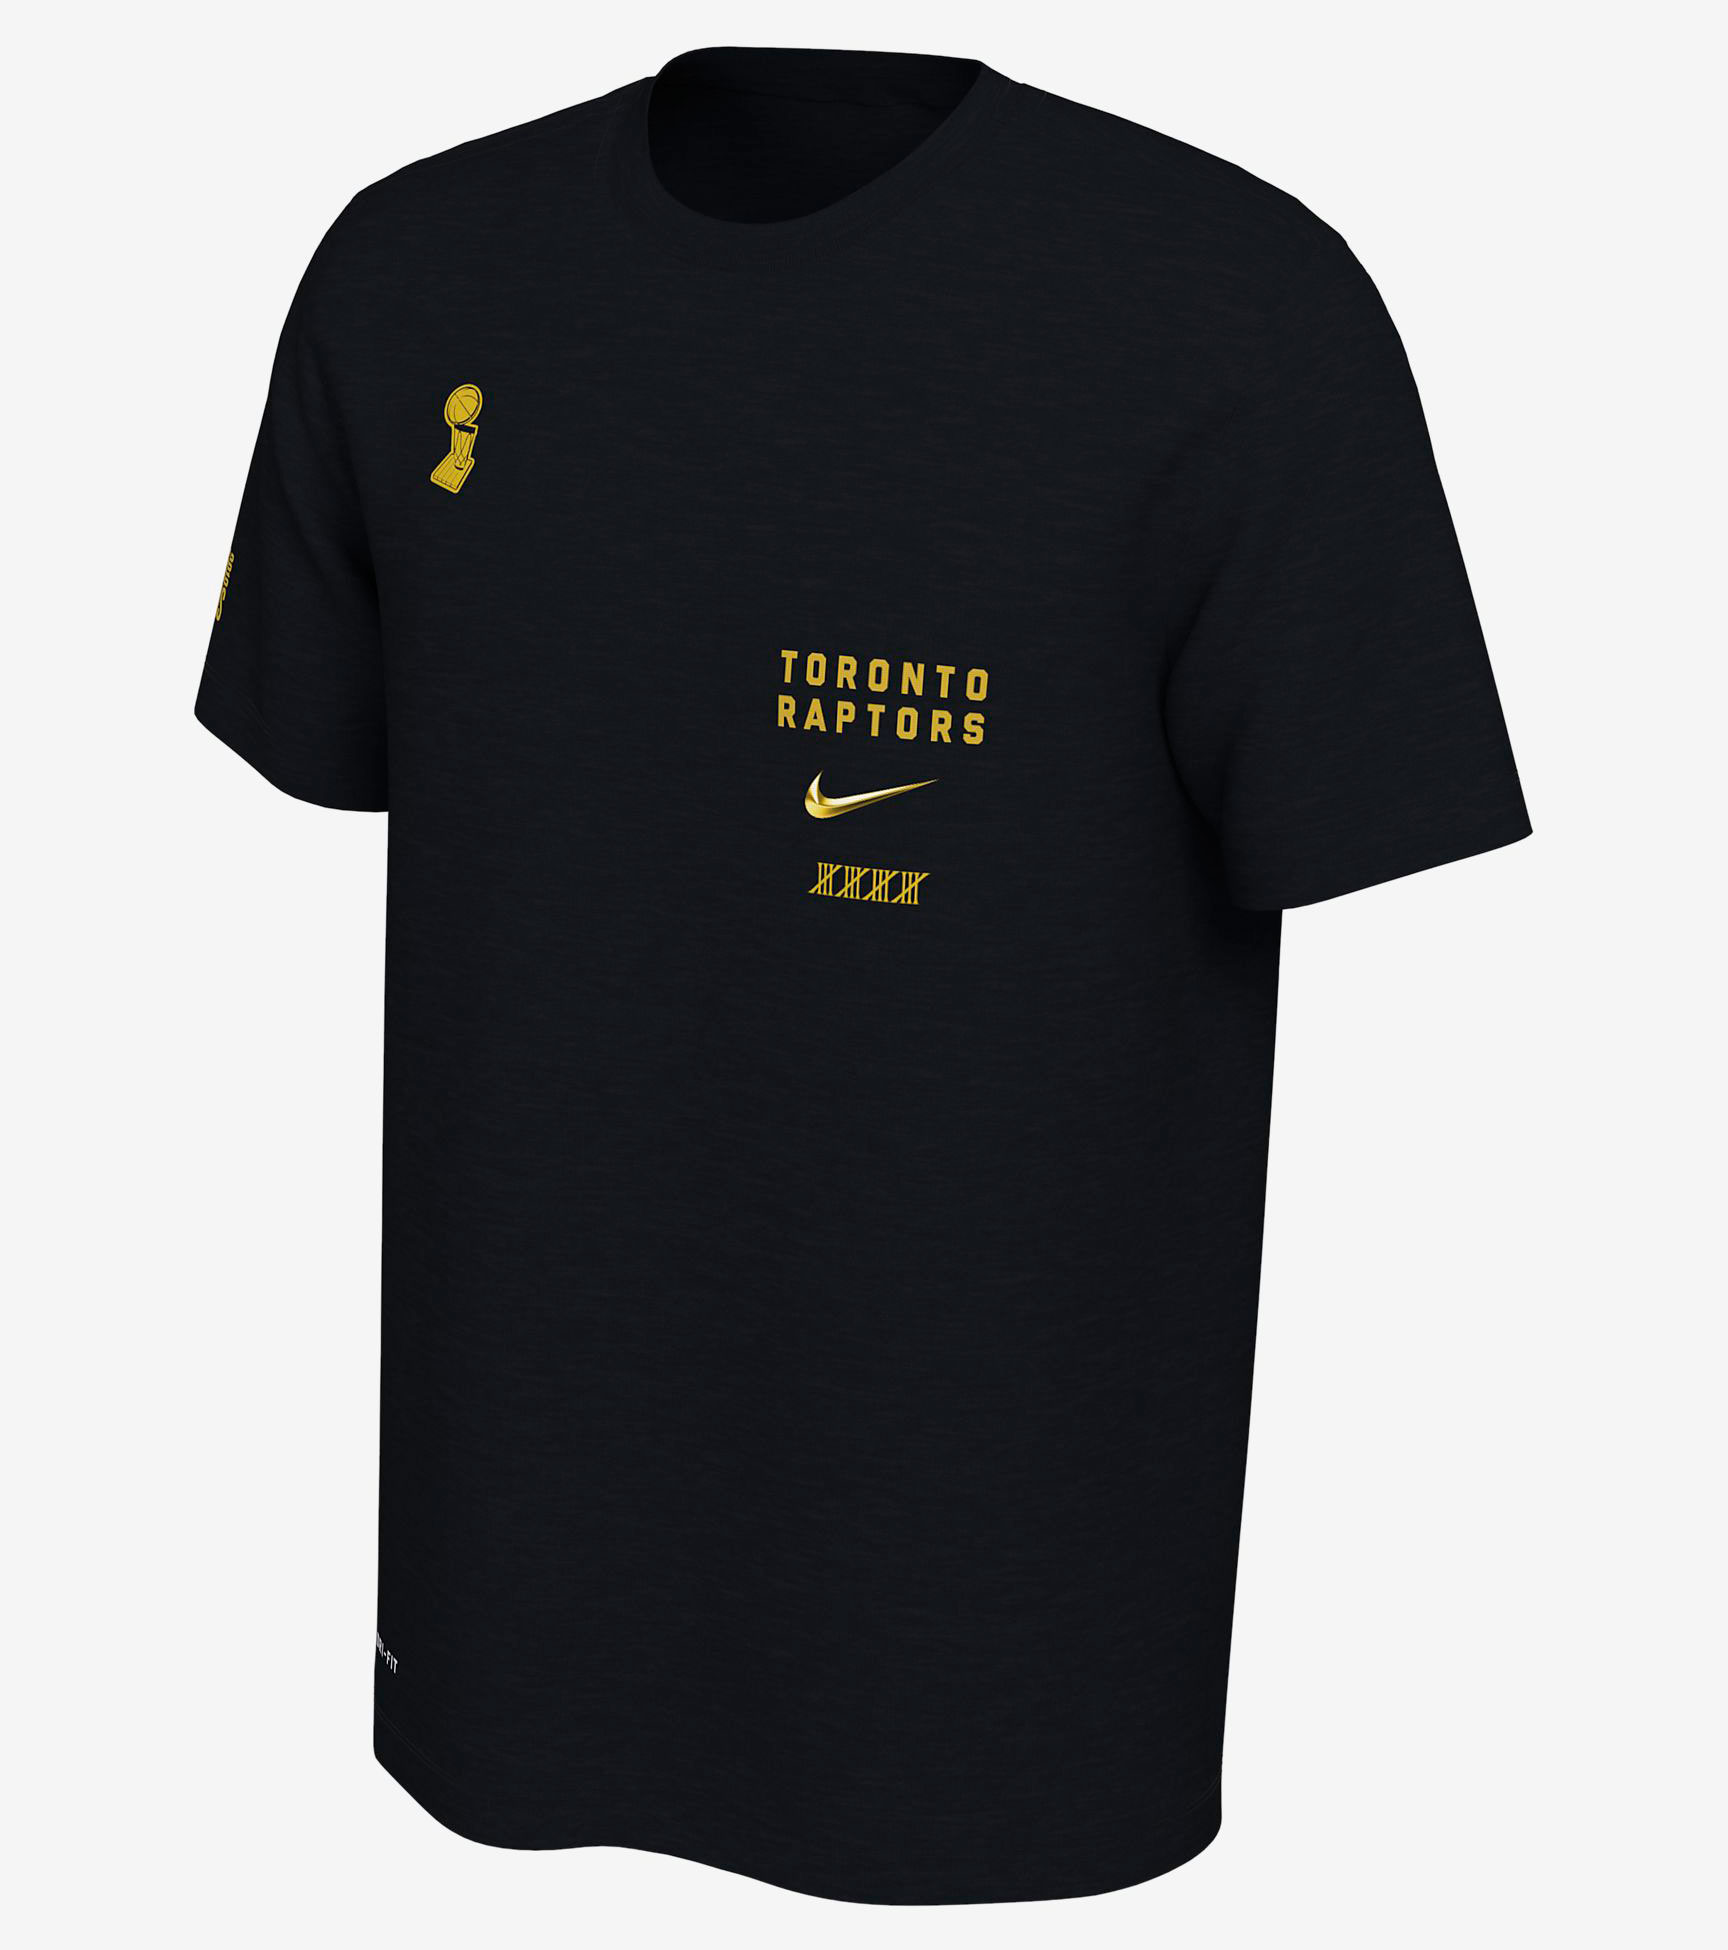 Toronto Raptors NBA Champions Nike Shirts | SneakerFits.com